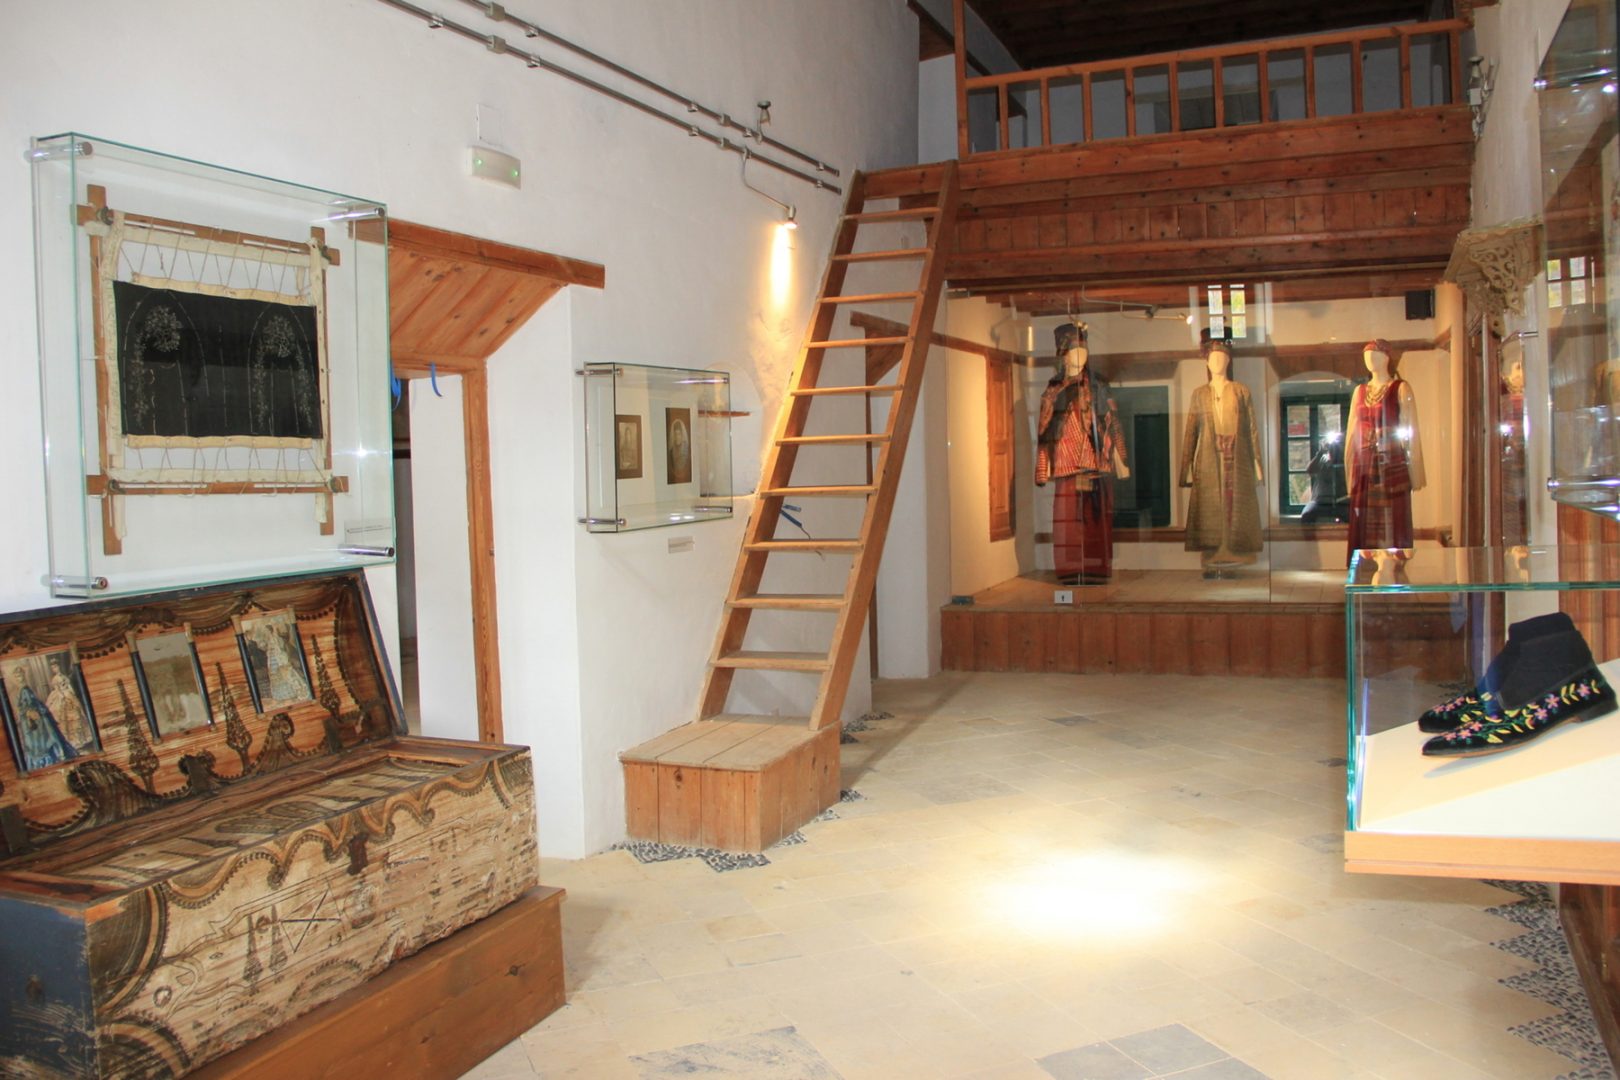 Symi Archaeological Museum